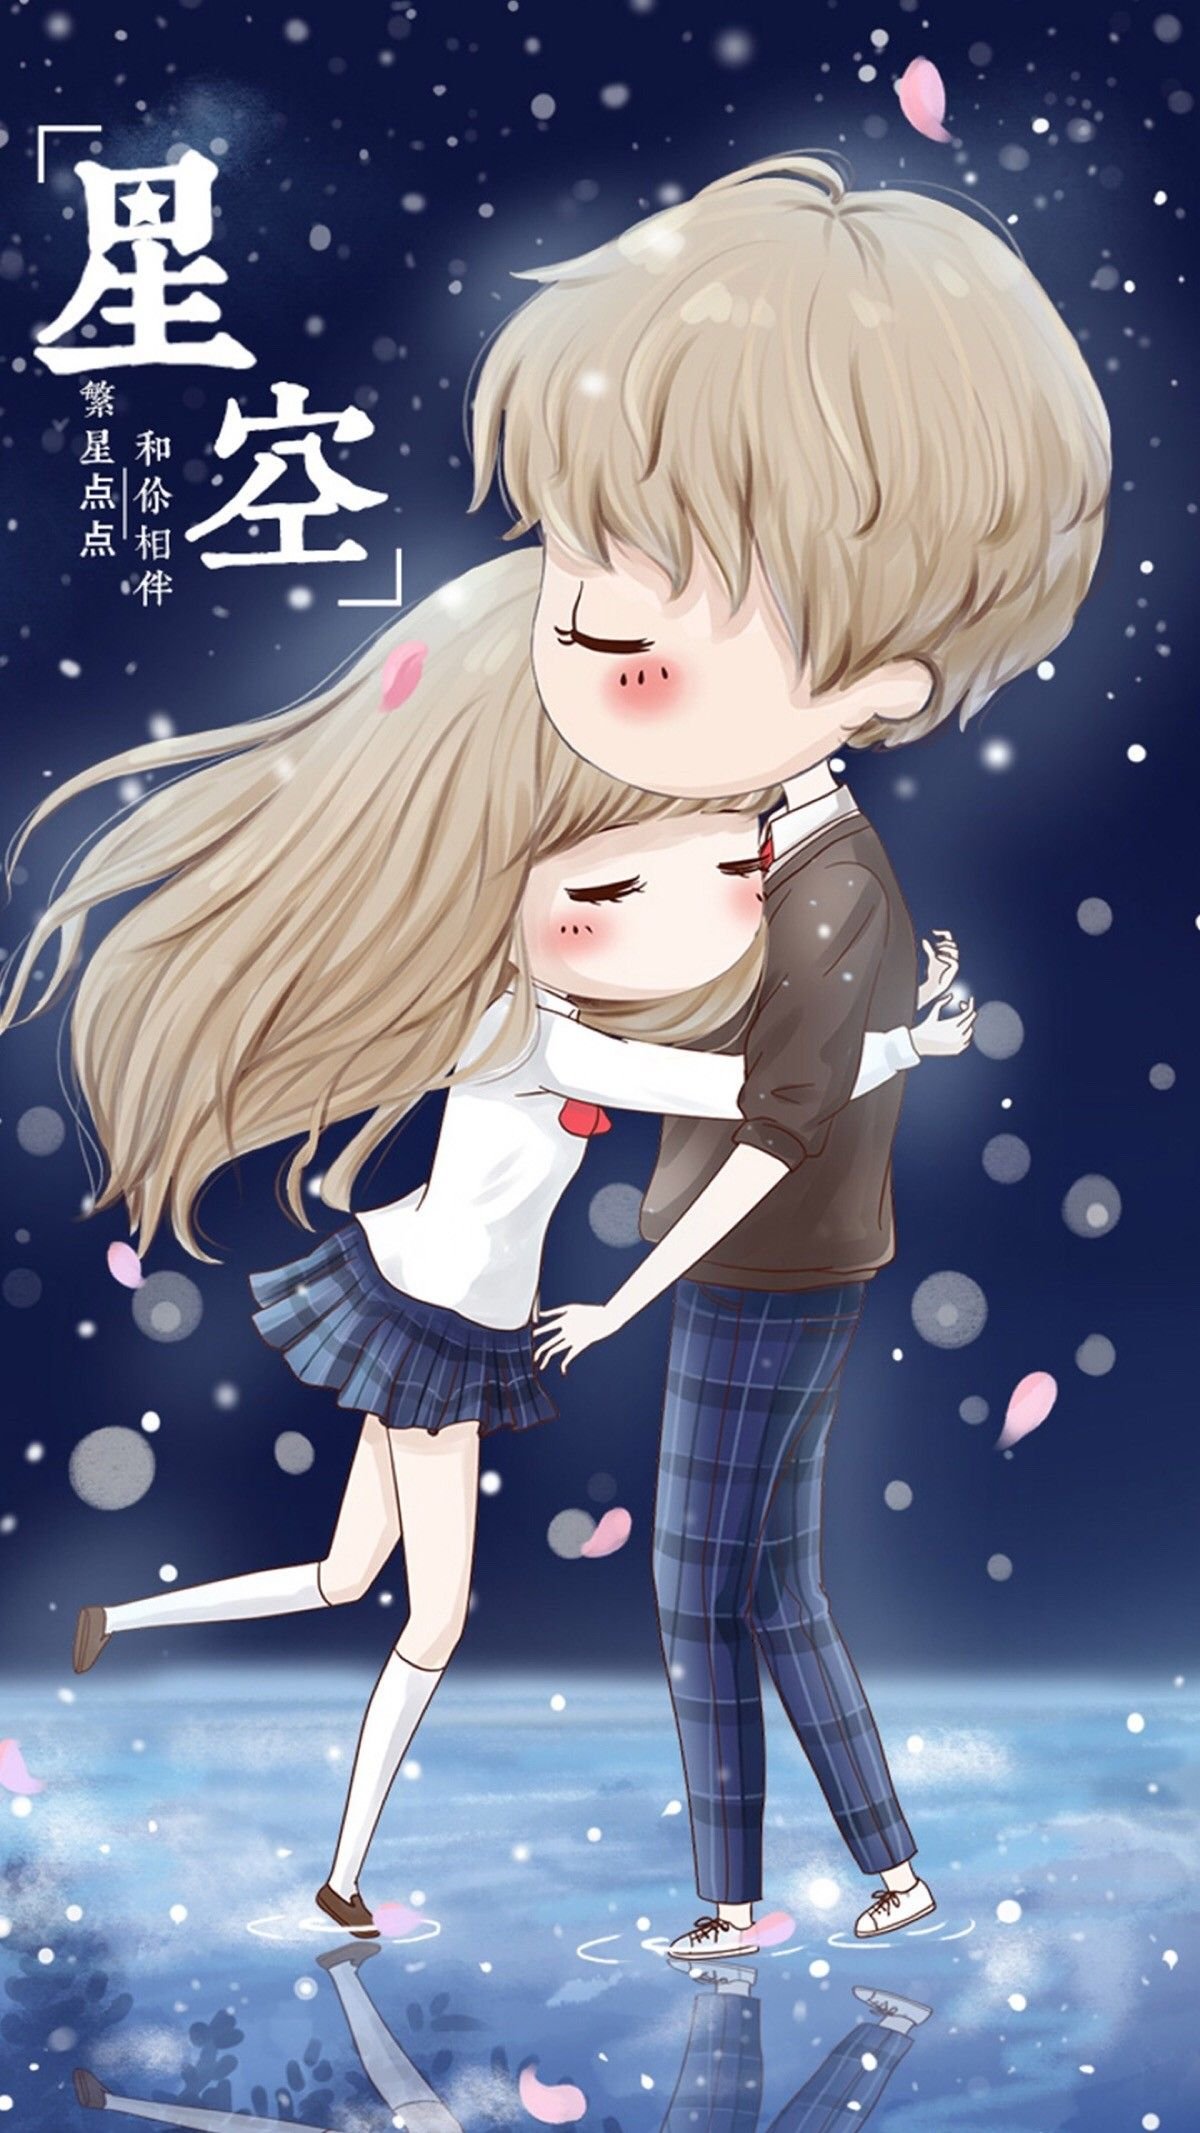 Free: hugs #anime #couple #animecouple - Anime Girl And Boy Love, HD Png  ... - nohat.cc